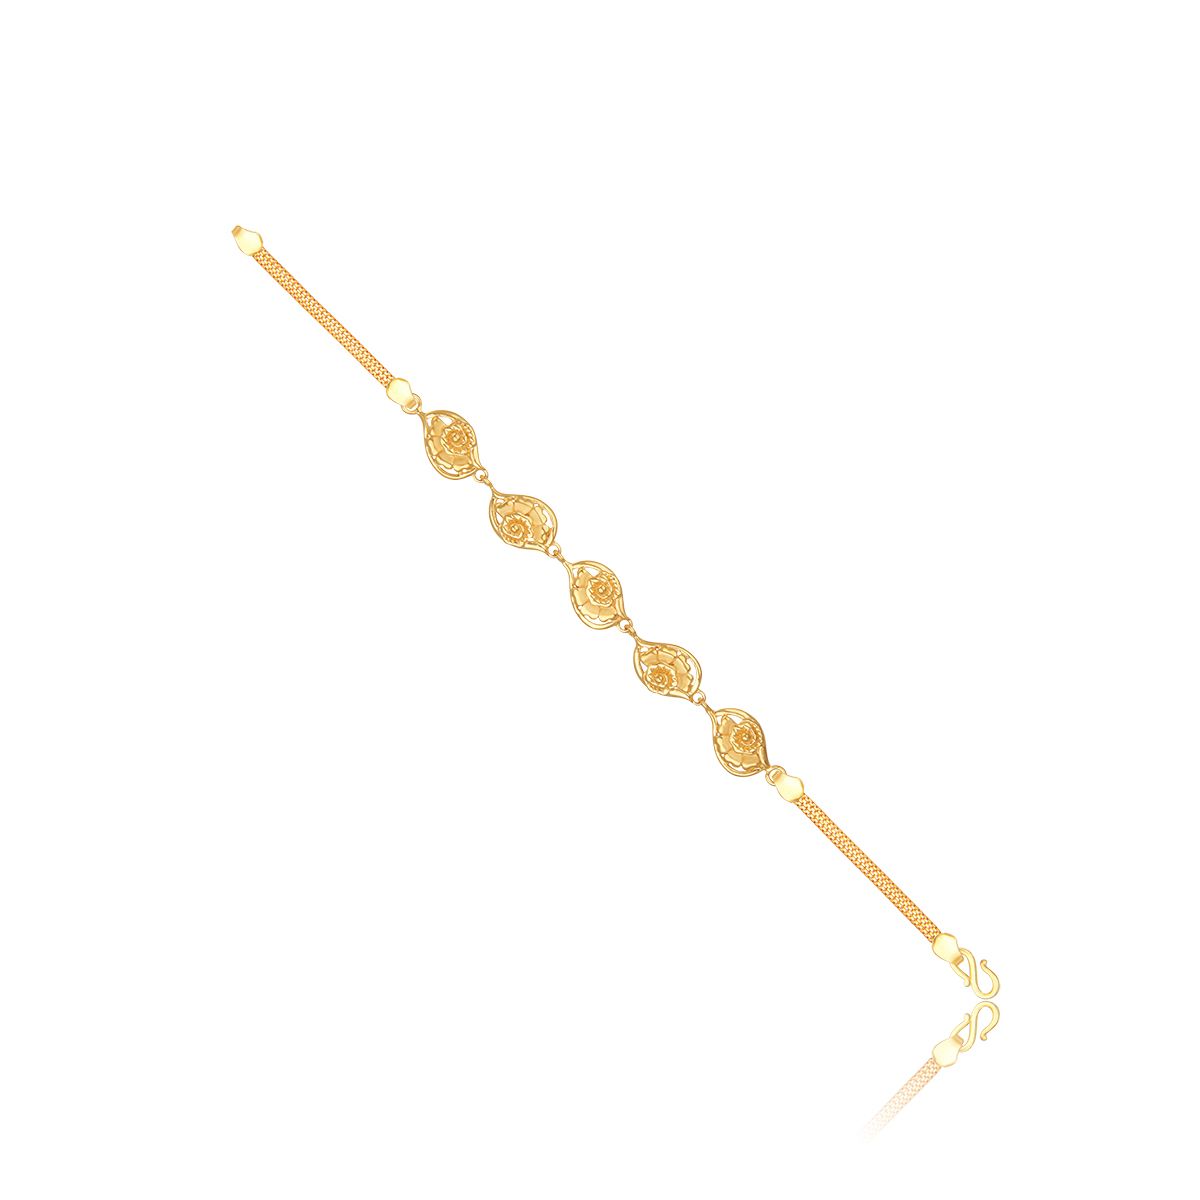 6 Types 24K Yellow Gold Plated Fancy Women's Chains Bracelet 8" |  eBay